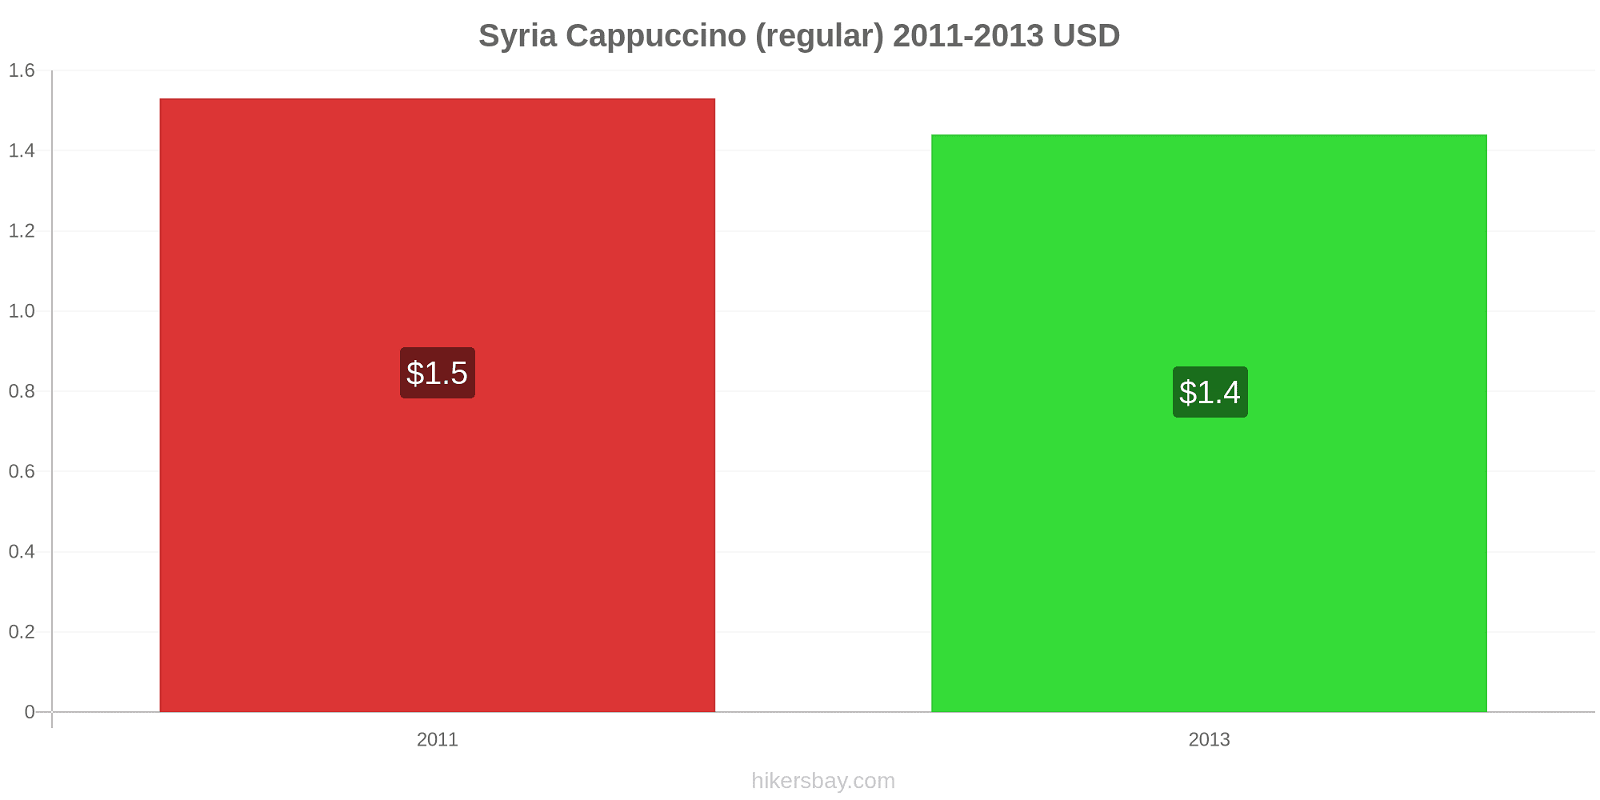 Syria price changes Cappuccino hikersbay.com